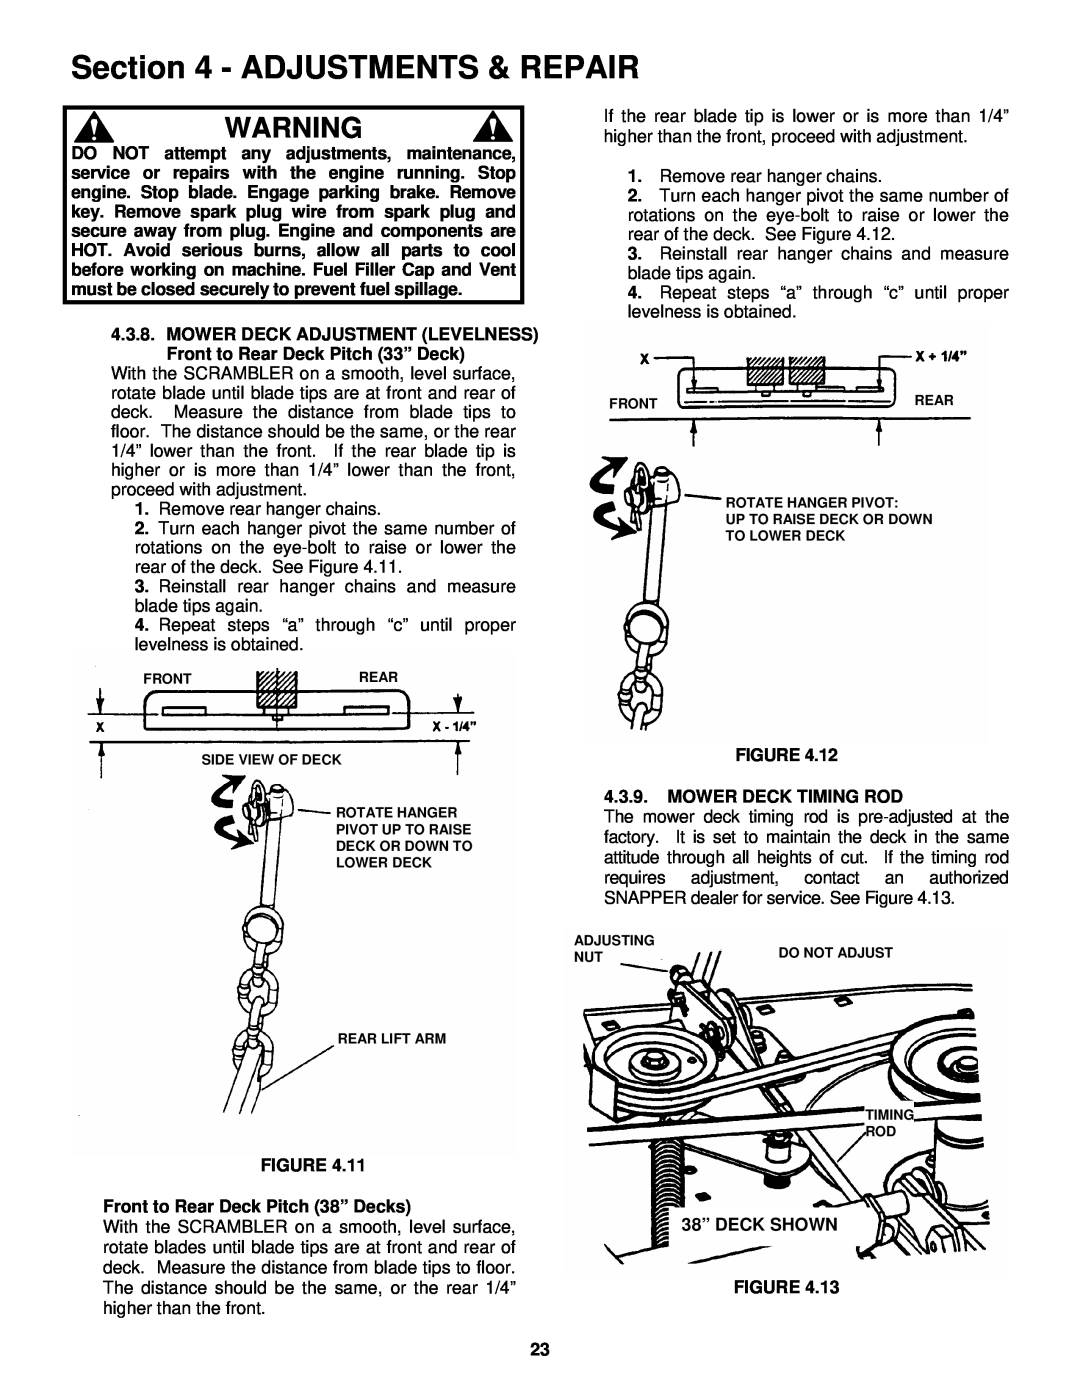 Snapper SZT18336BVE Adjustments & Repair, FIGURE Front to Rear Deck Pitch 38” Decks, 3.9.MOWER DECK TIMING ROD 